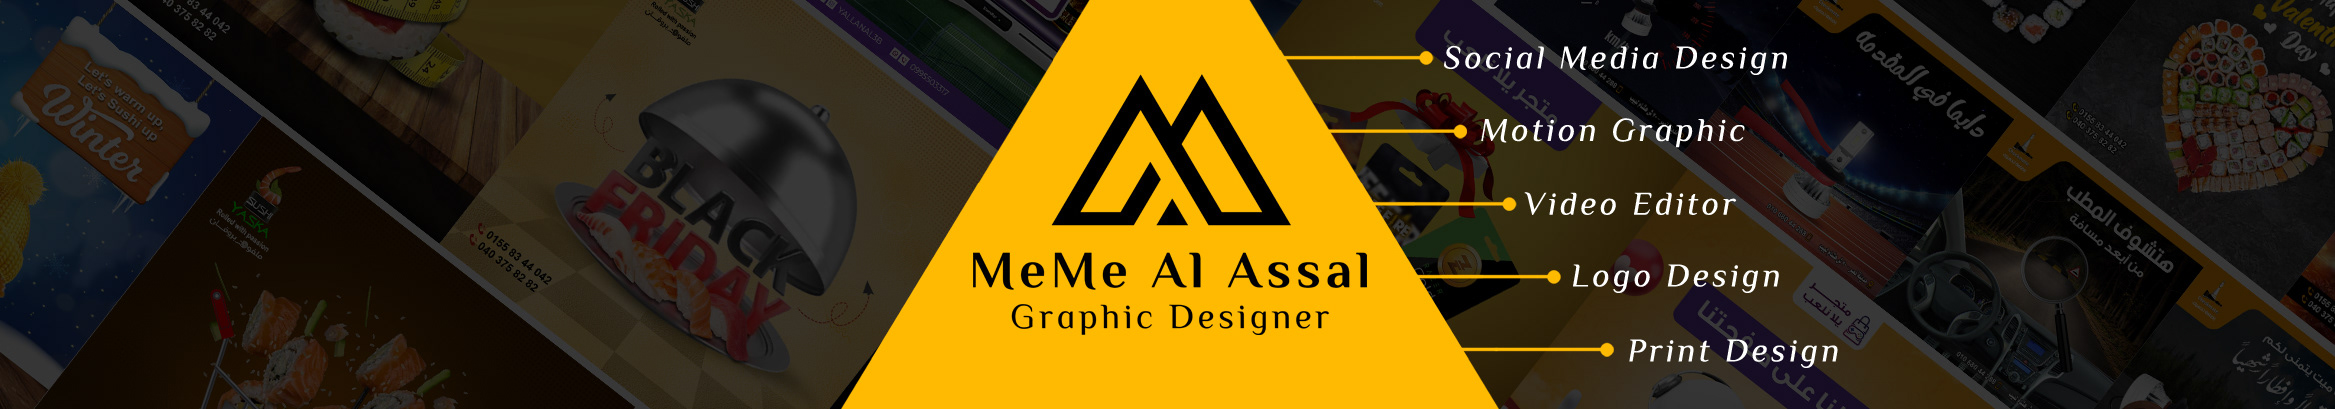 Meme Al Assal's profile banner